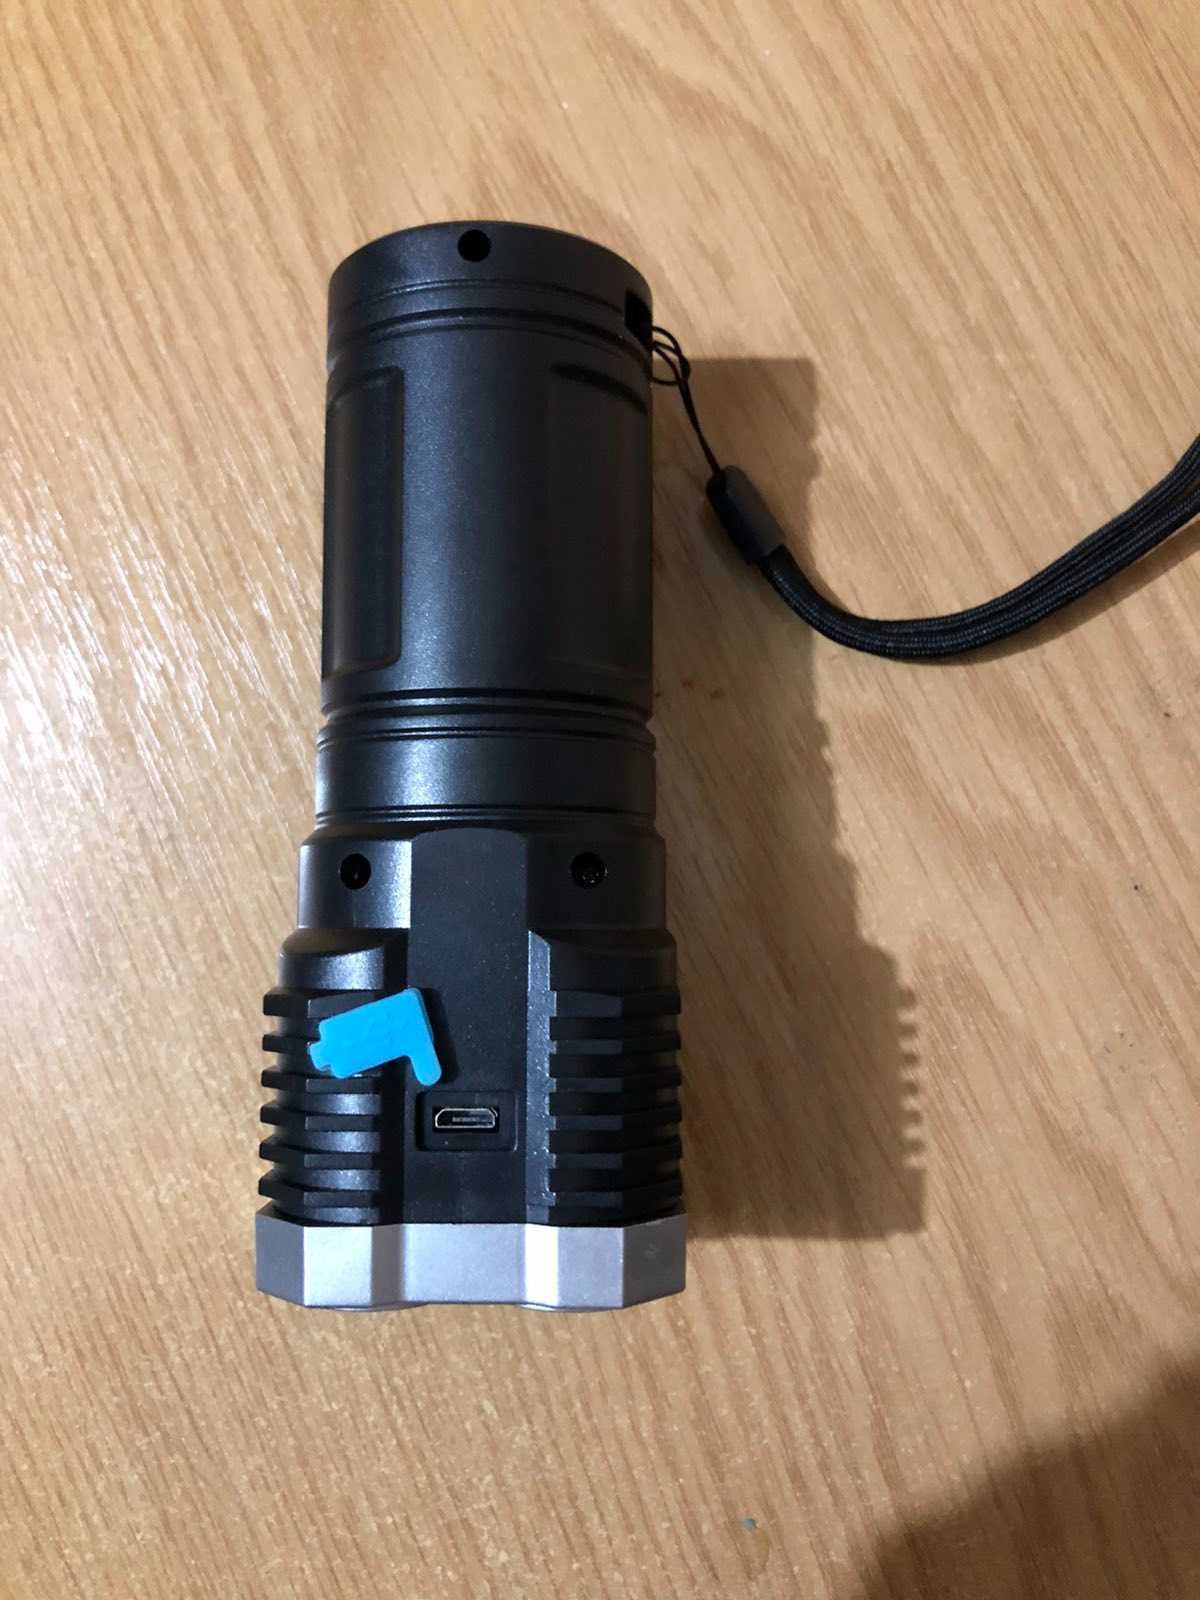 Мощный аккумуляторный фонарь X509/S03-4LED+COB з/у USB-micro